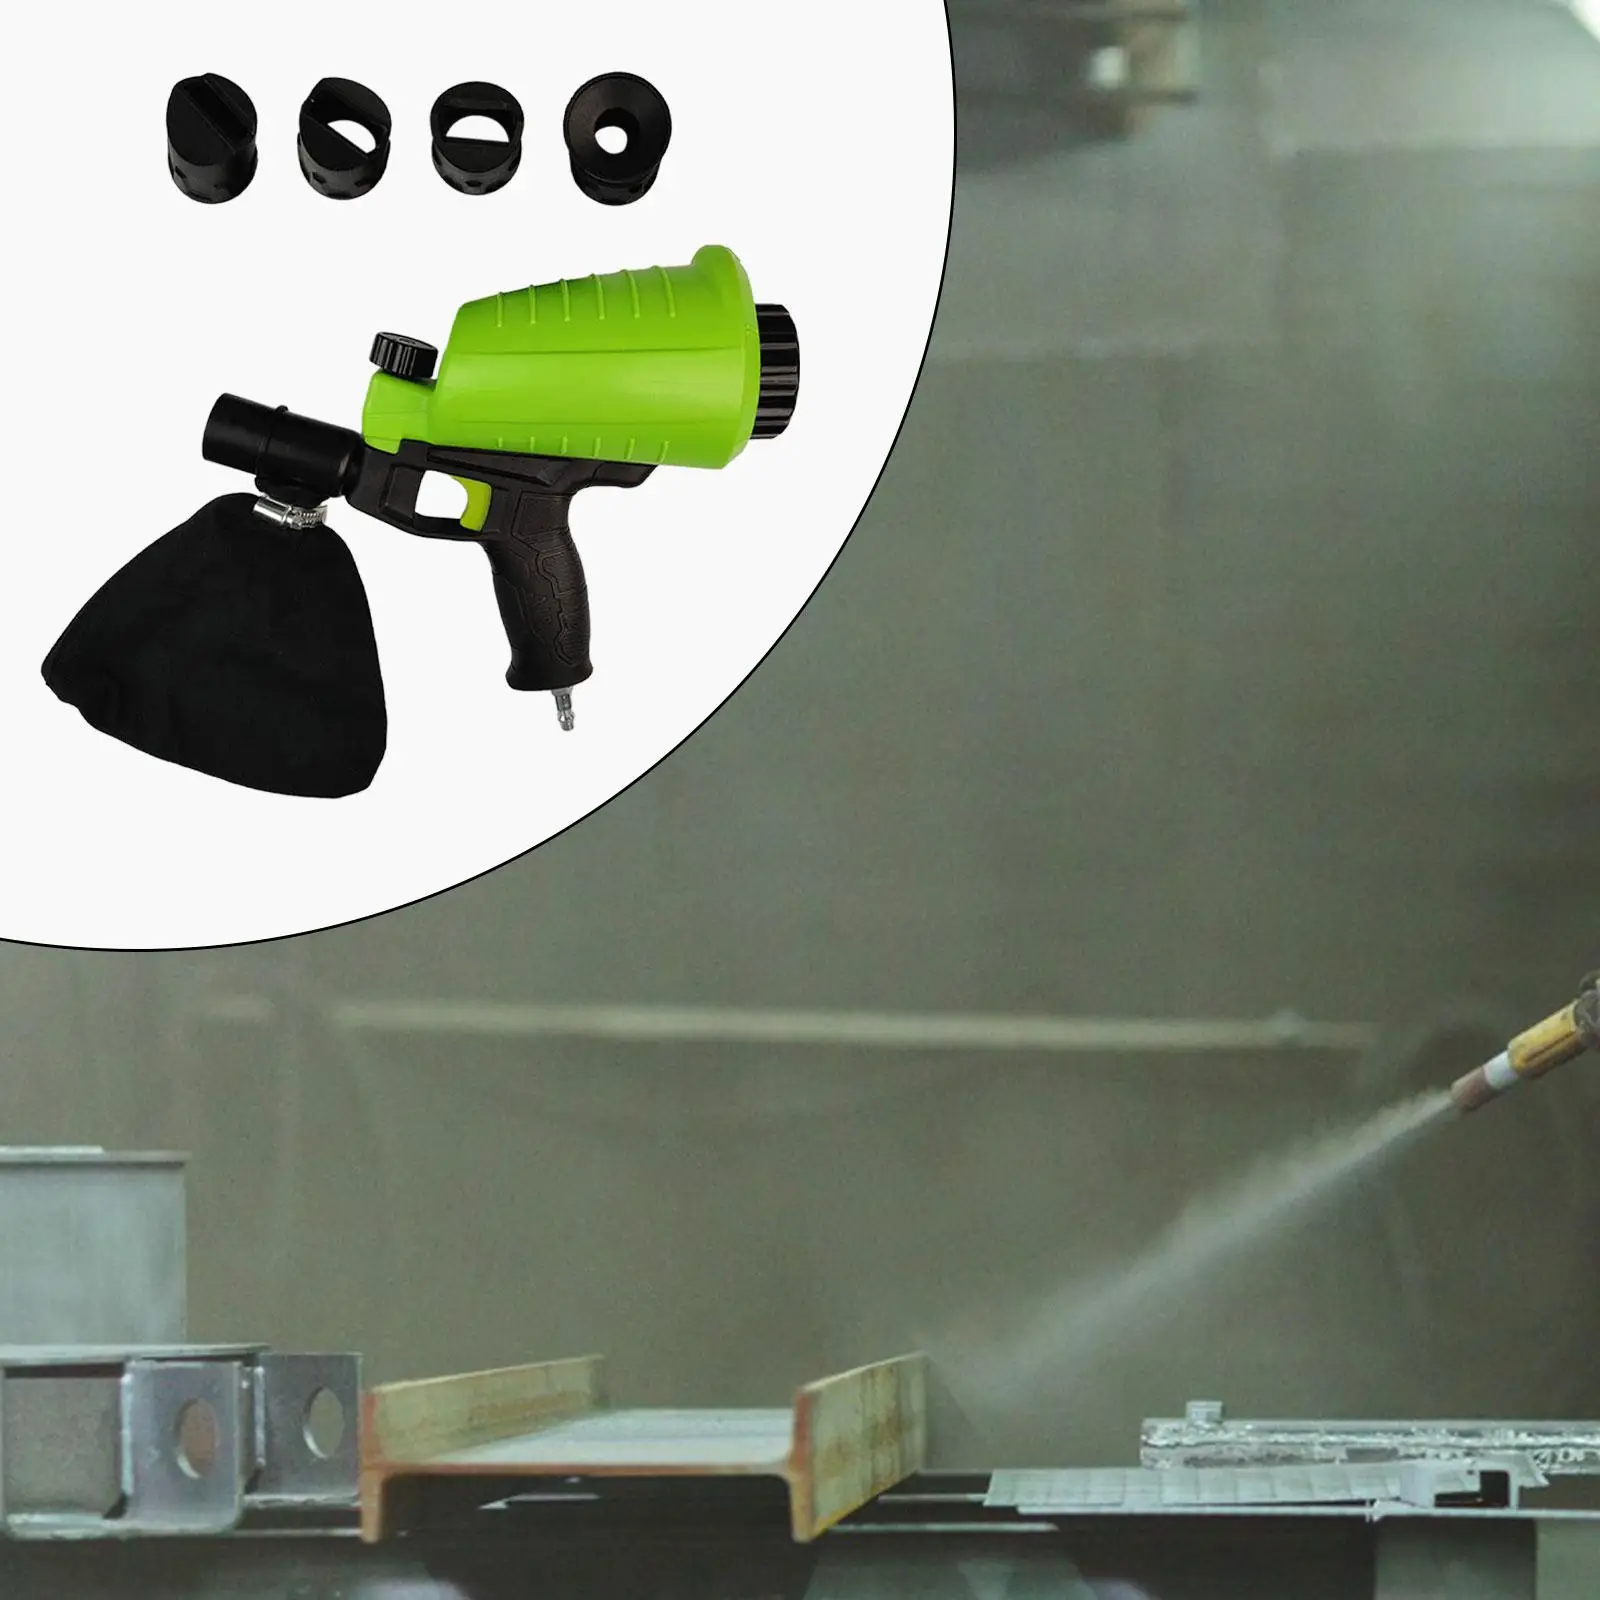 Air Spray Sandblasting Tool Portable Comfortable Grip Adjustable Flow Rate Spray for Sanding Compact Size Sturdy